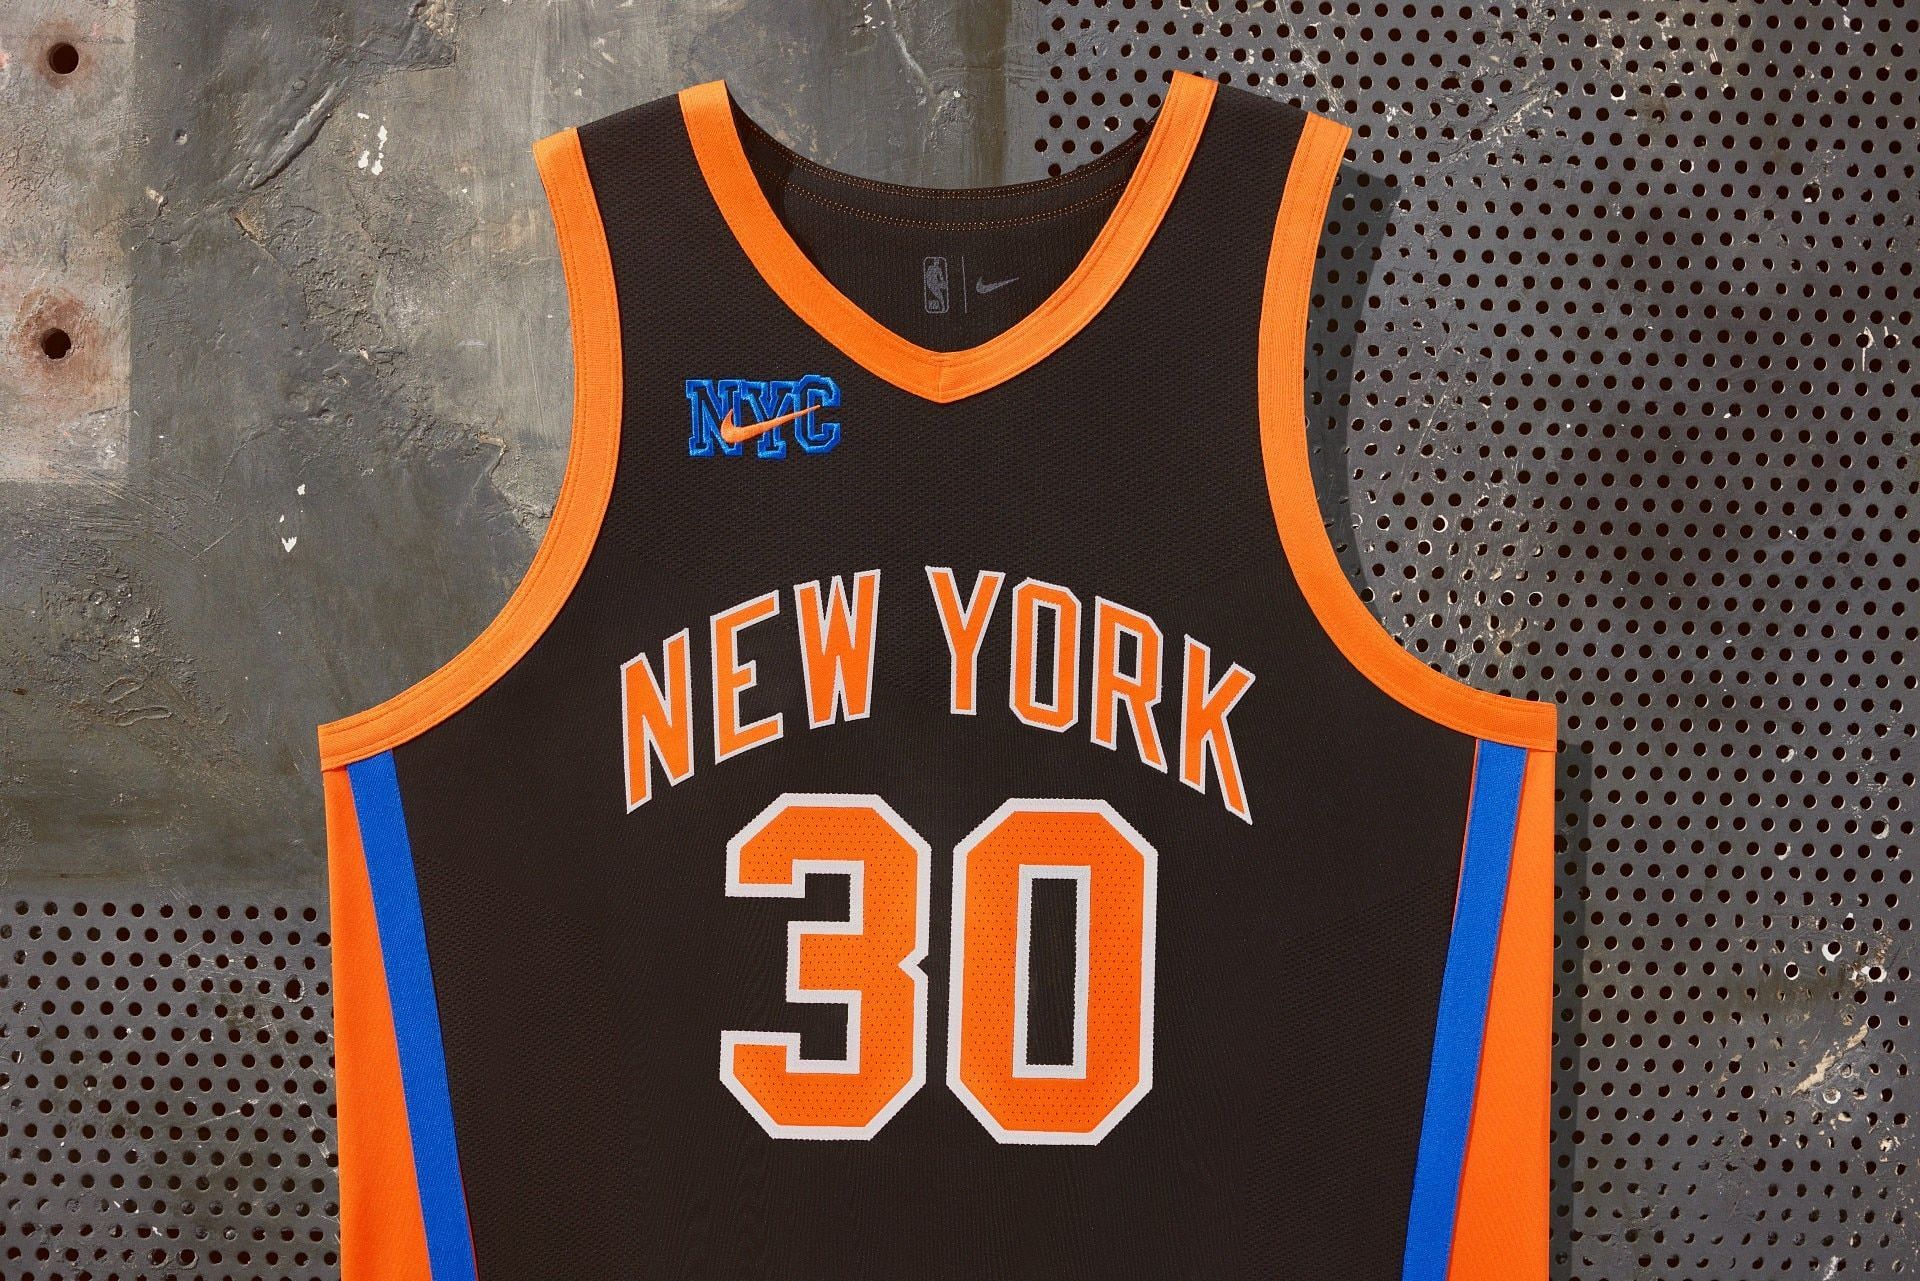 New York Knicks City Edition jersey looks beautiful (Image via Nike)